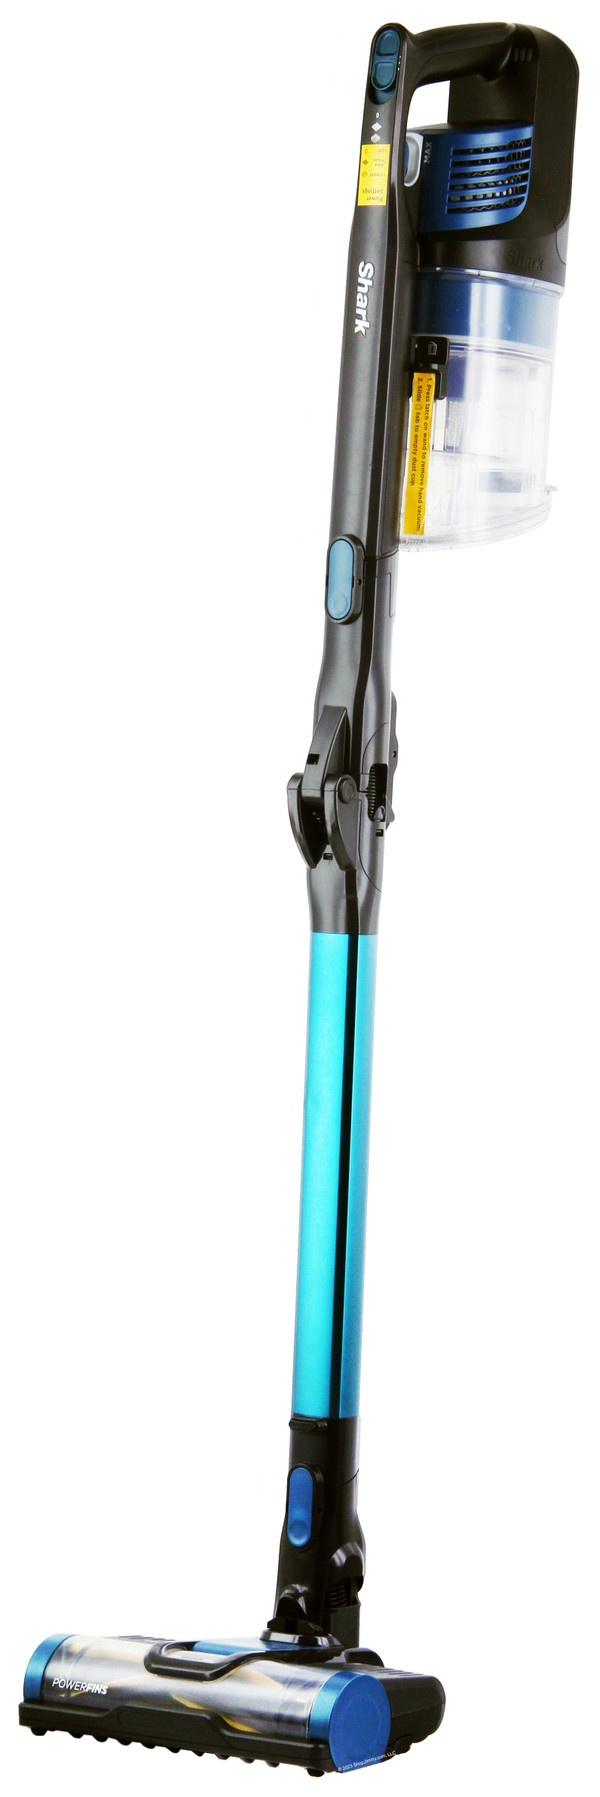 Shark IZ140 Rocket Pro Cordless Stick Vacuum with Self-Cleaning Brushroll